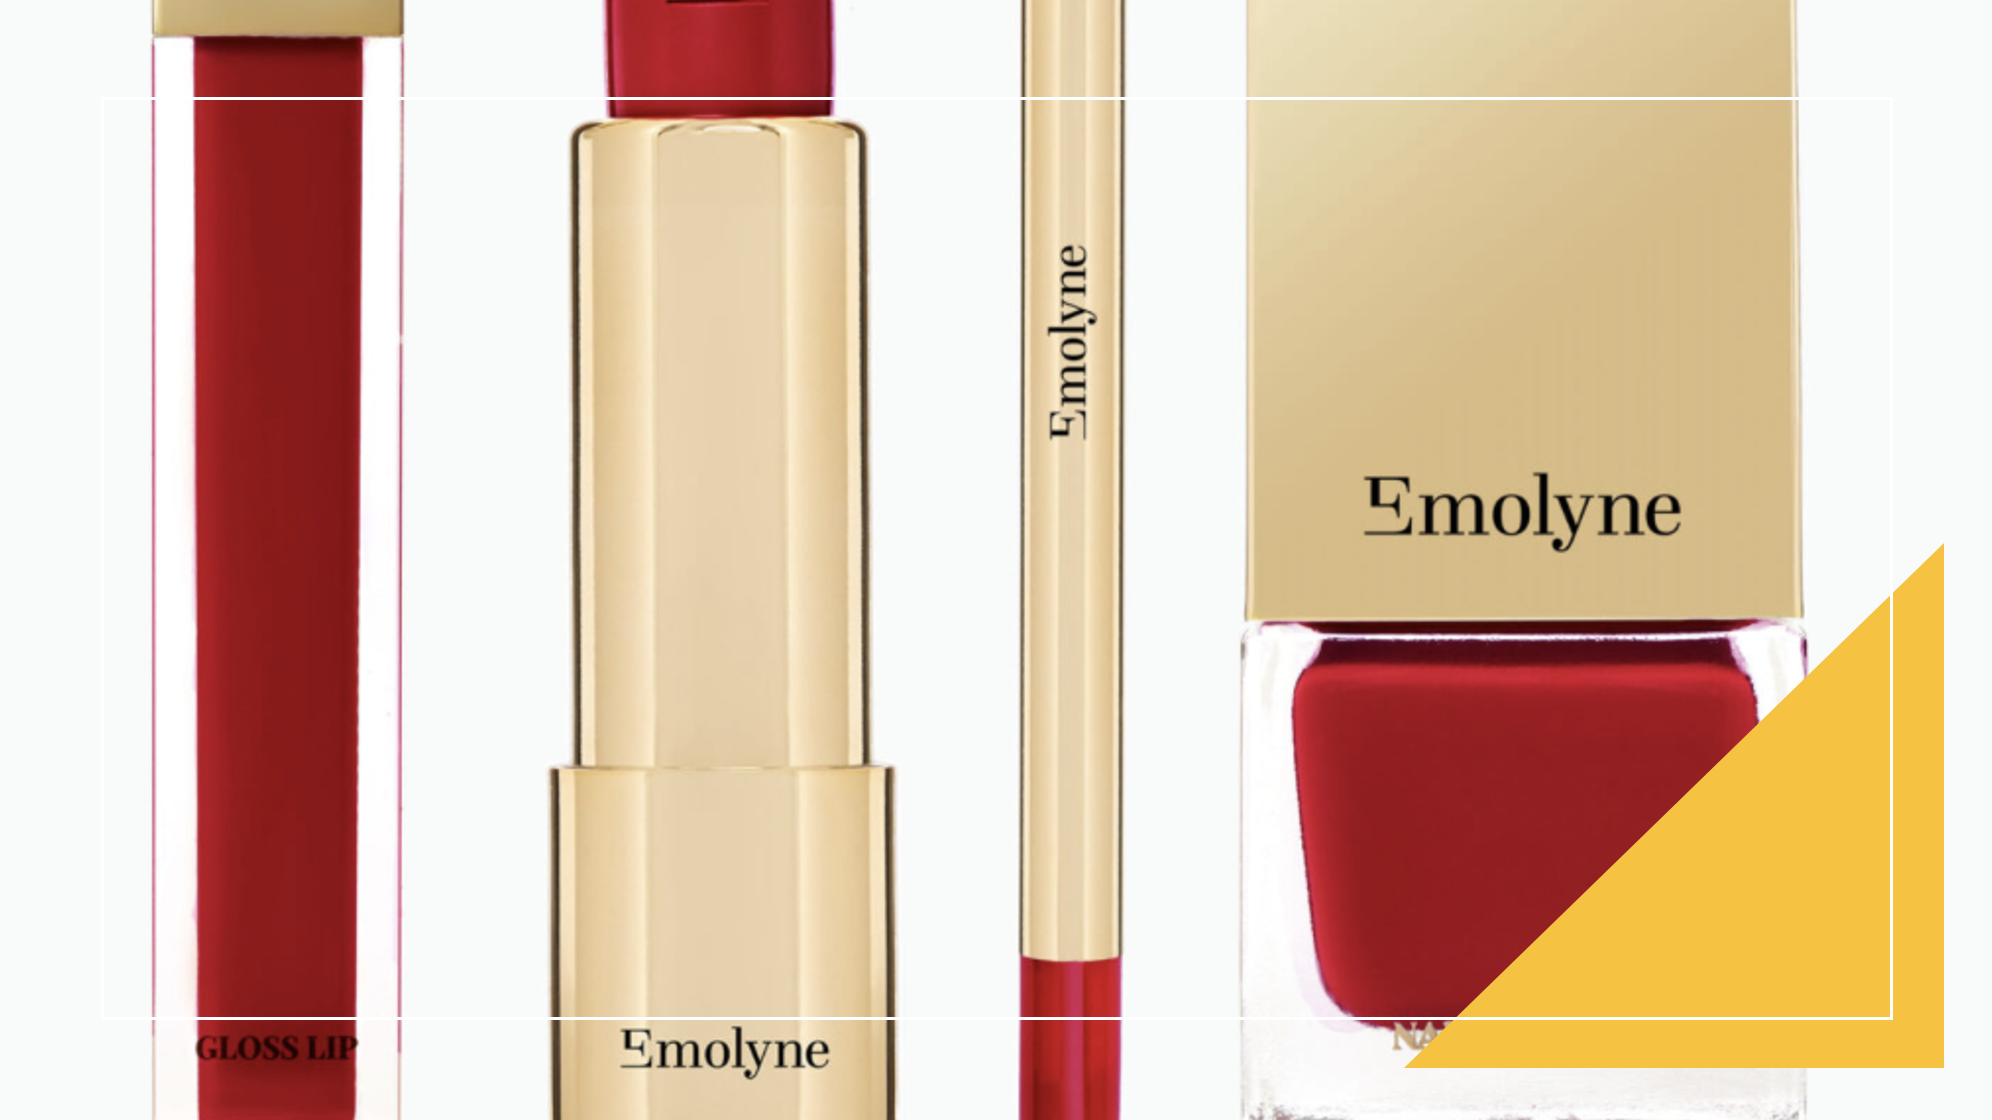 Emolyne Beauty products